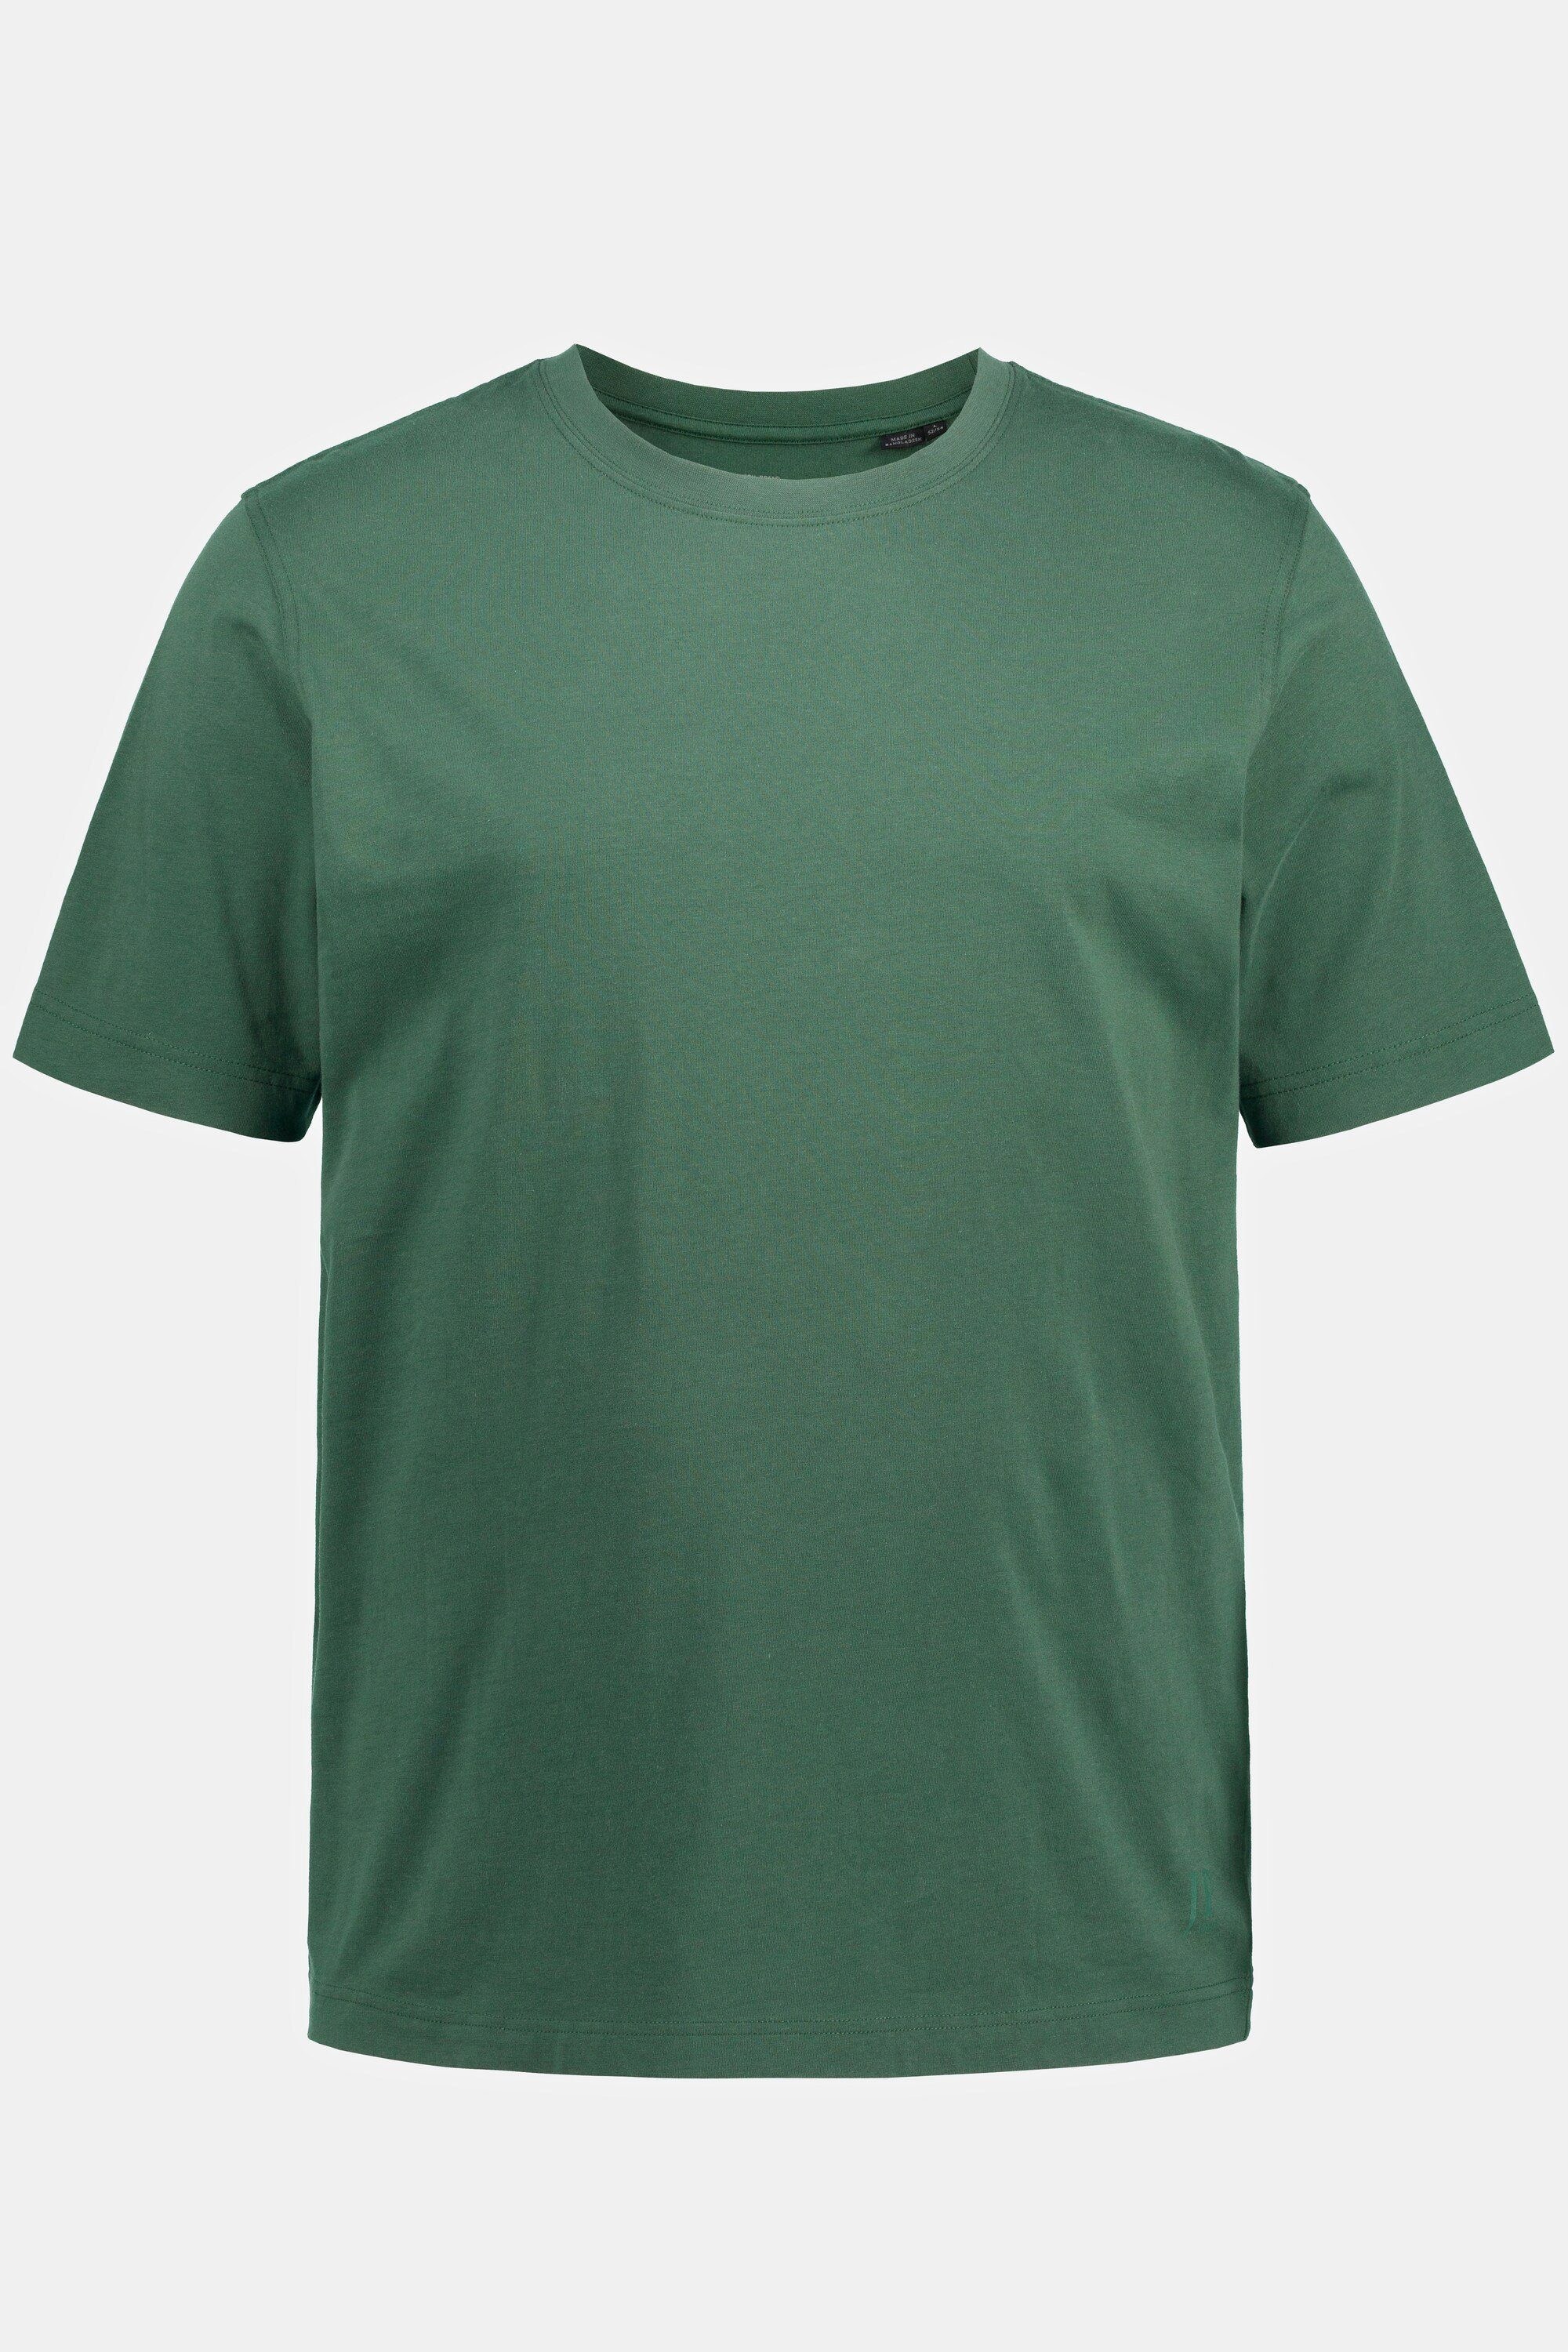 8XL T-Shirt JP1880 Baumwolle Rundhals gekämmte Basic T-Shirt bis grün